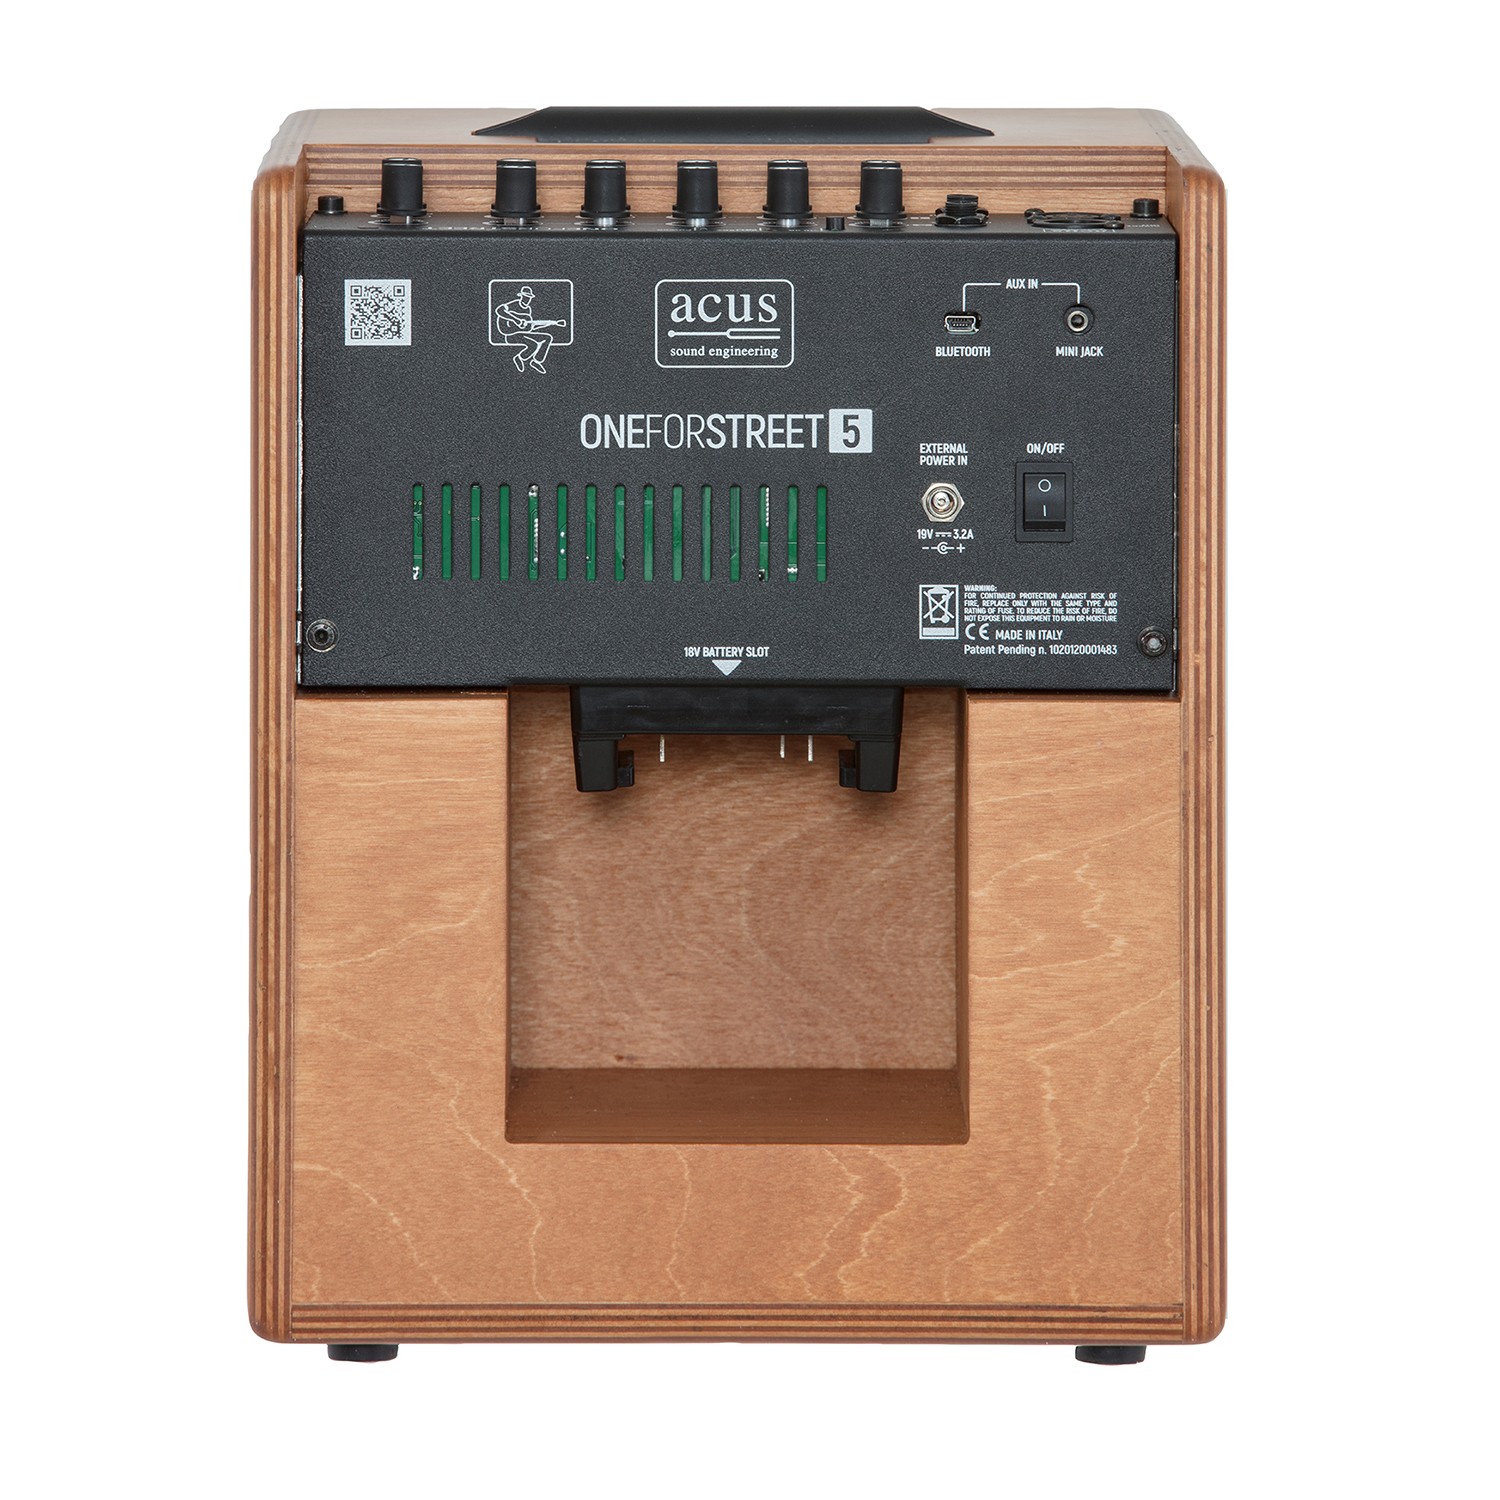 Acus Oneforstreet 5 Wood - Combo amplificador acústico - Variation 3